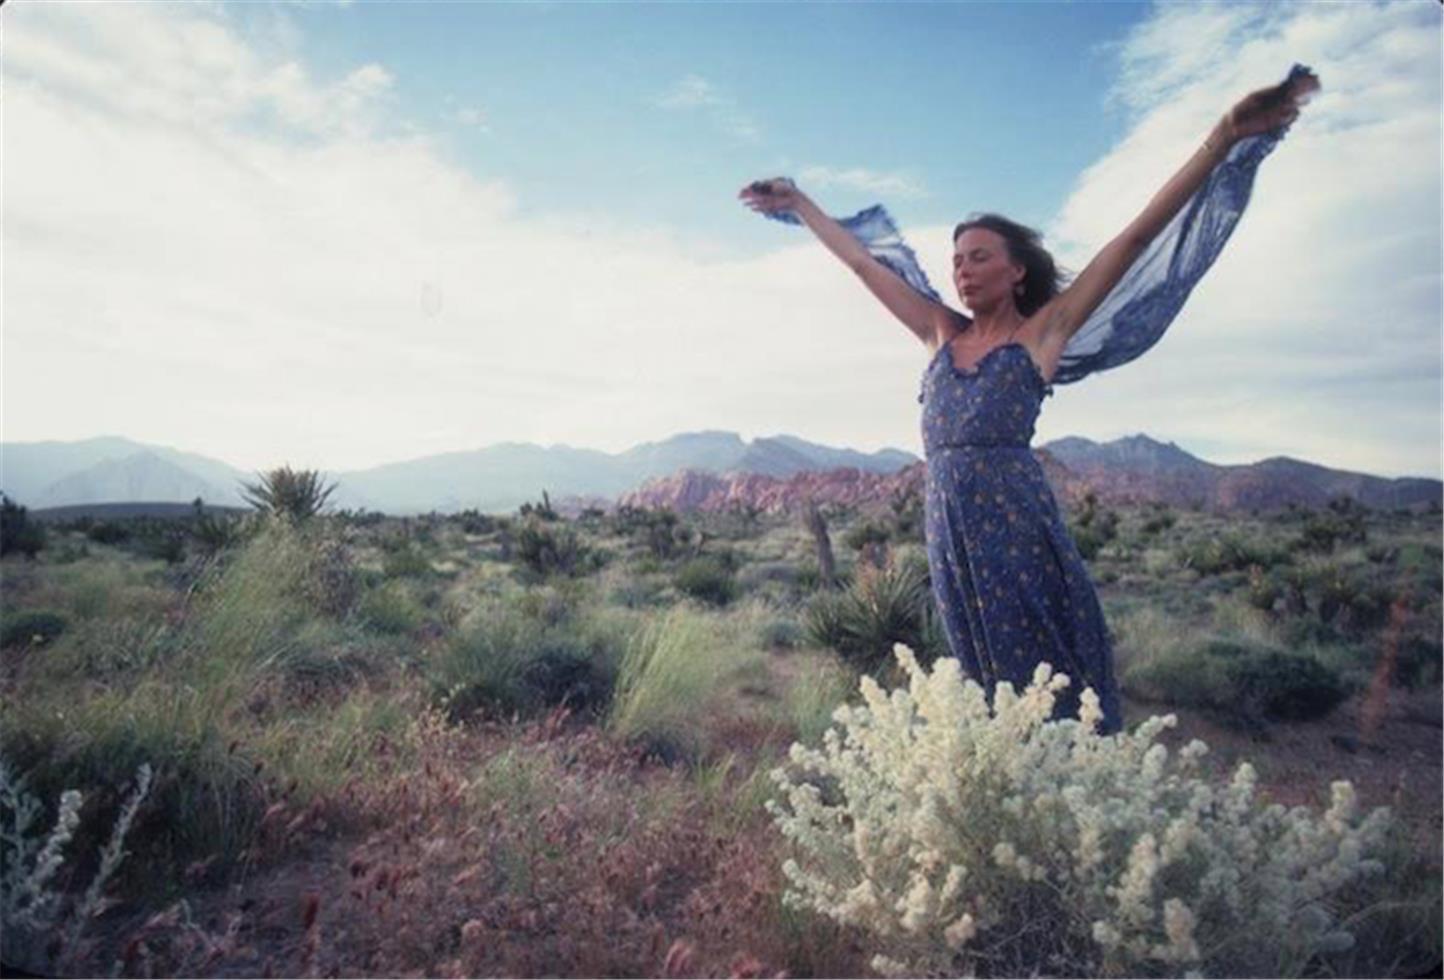 Color Photograph Henry Diltz - Joni Mitchell in Desert (Jon Mitchell au désert), 1970